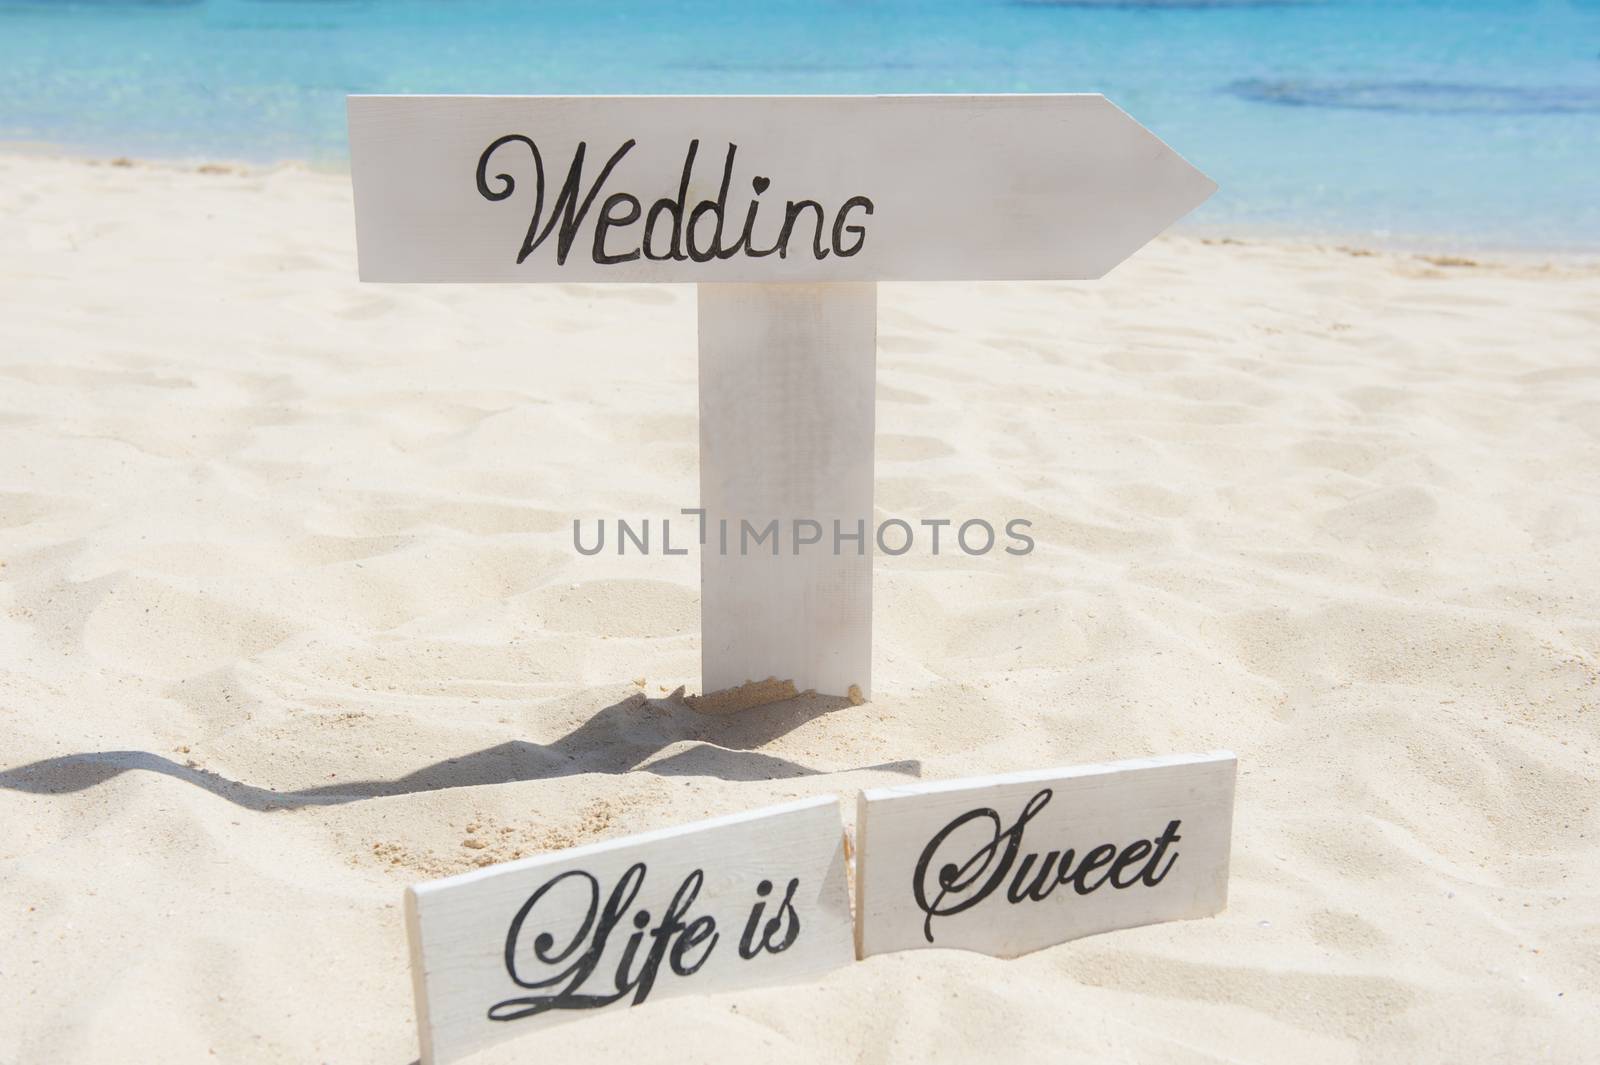 Wedding ceremony setup on a tropical beach by paulvinten